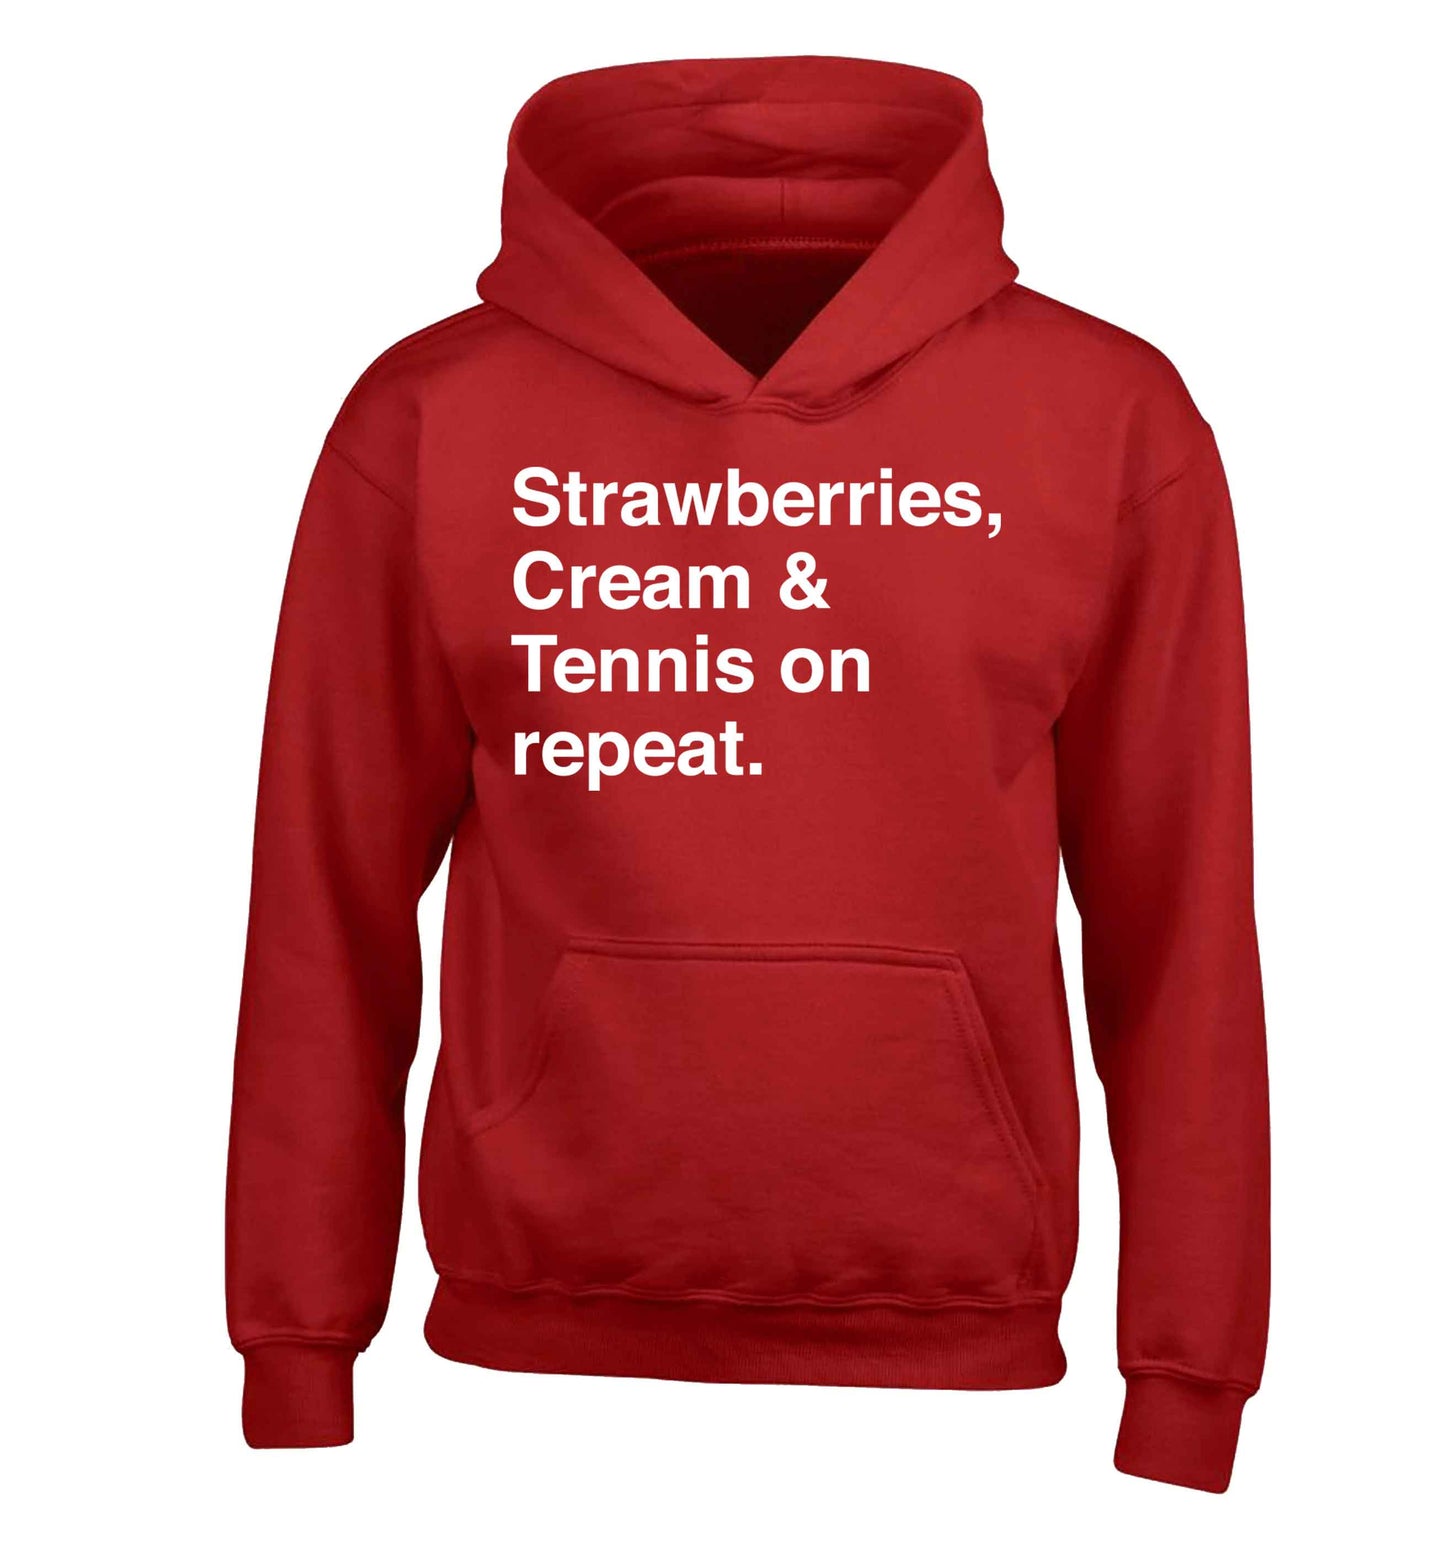 Strawberries, cream and tennis on repeat children's red hoodie 12-13 Years